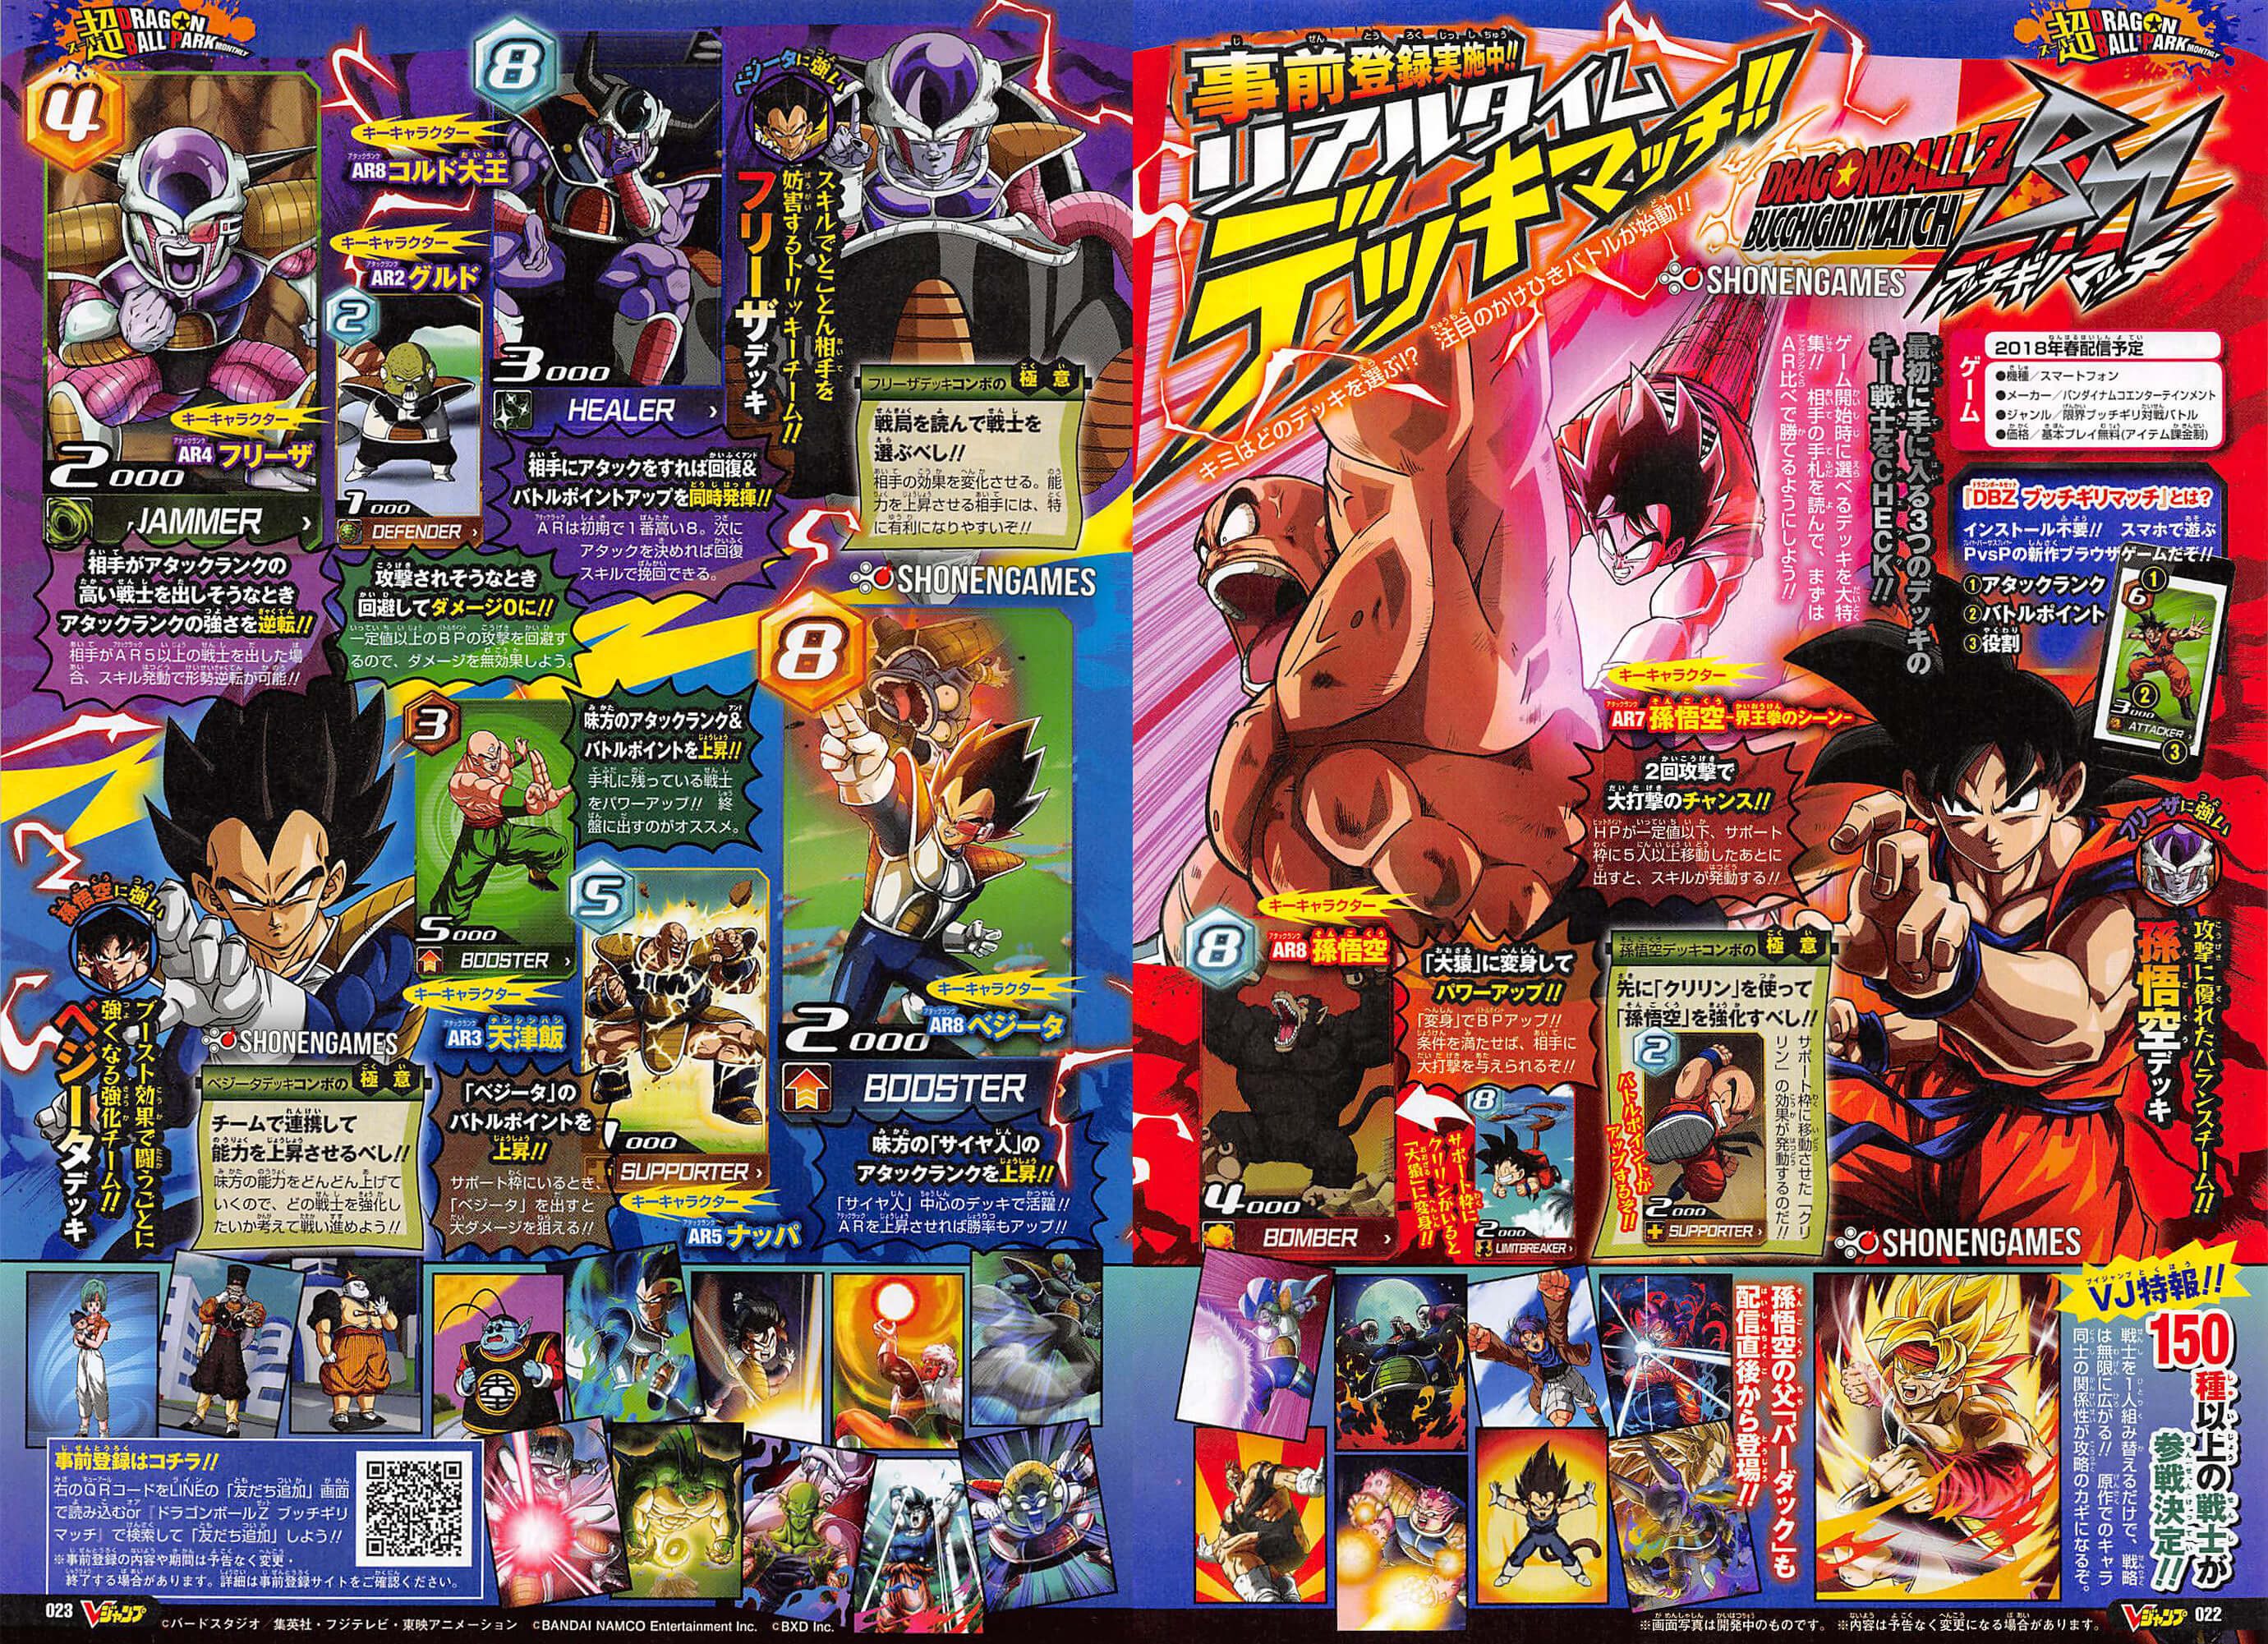 Dragon Ball Z Bucchigiri Match Smartphone Browser Game Pre-Opens, Streams  Video - News - Anime News Network